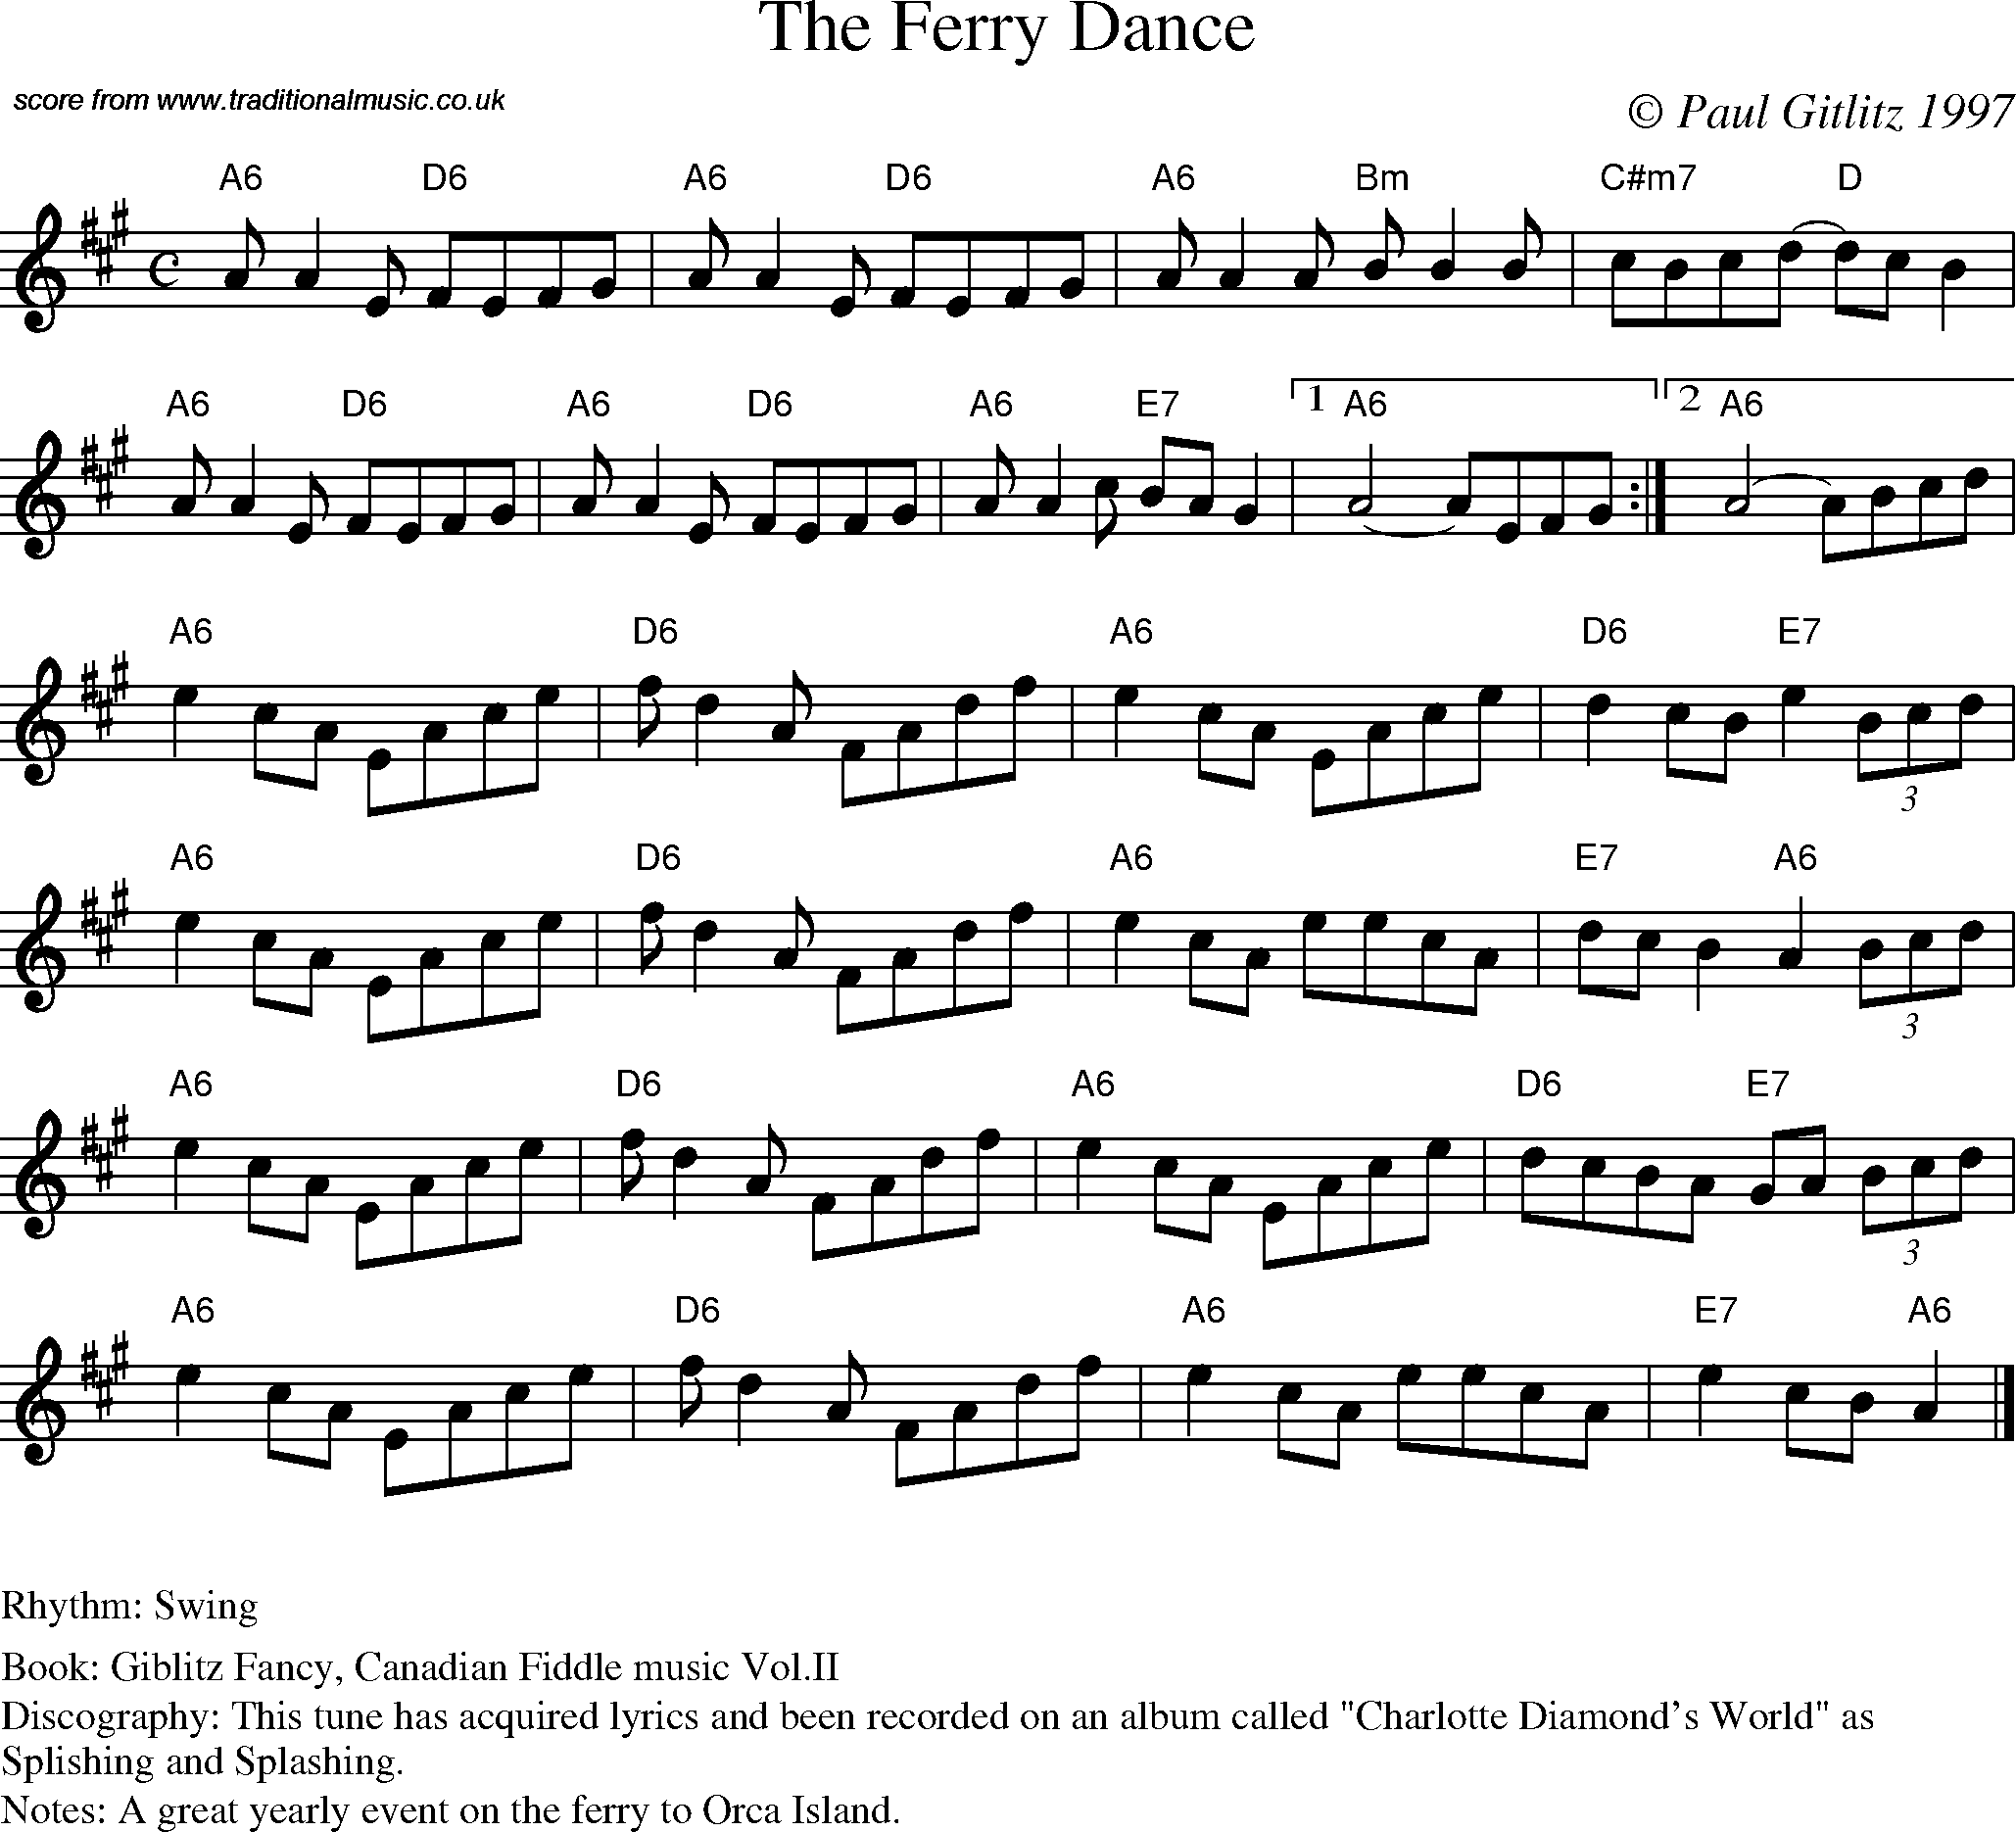 Sheet Music Score for Swing - The Ferry Dance